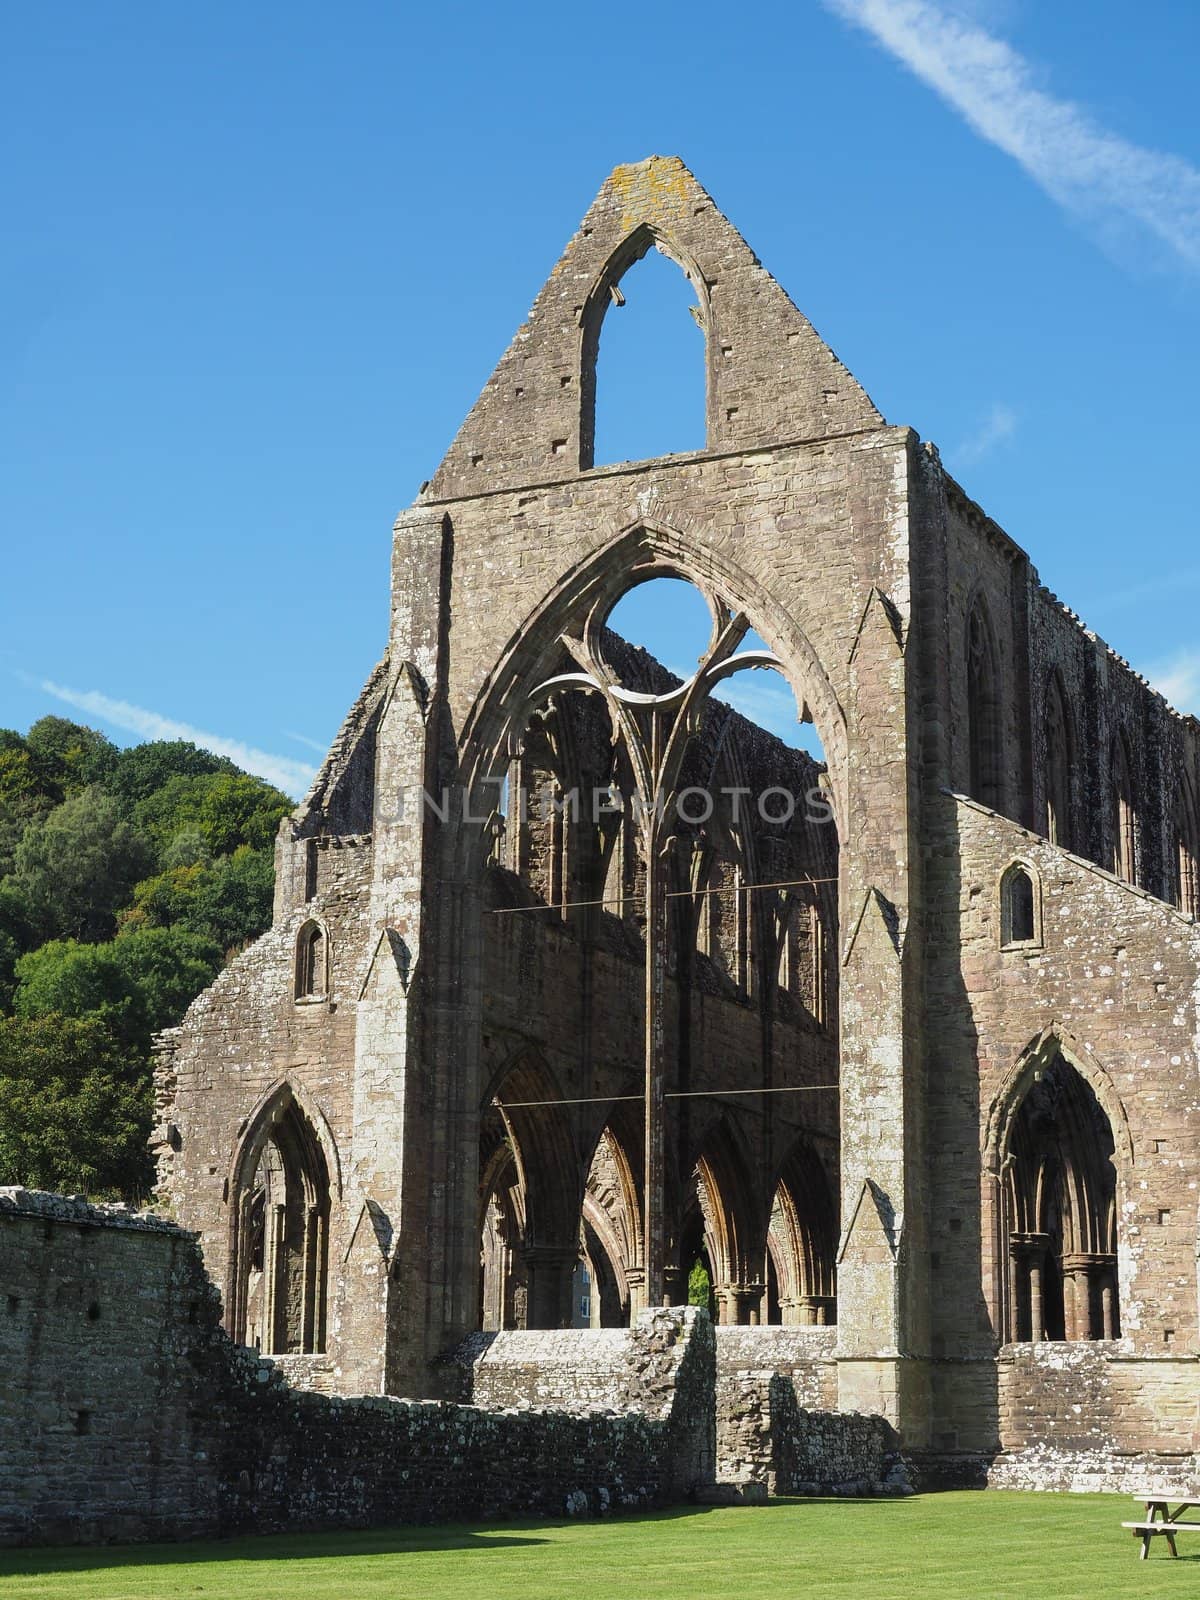 TINTERN, UK - CIRCA SEPTEMBER 2019: Tintern Abbey (Abaty Tyndyrn in Welsh) ruins